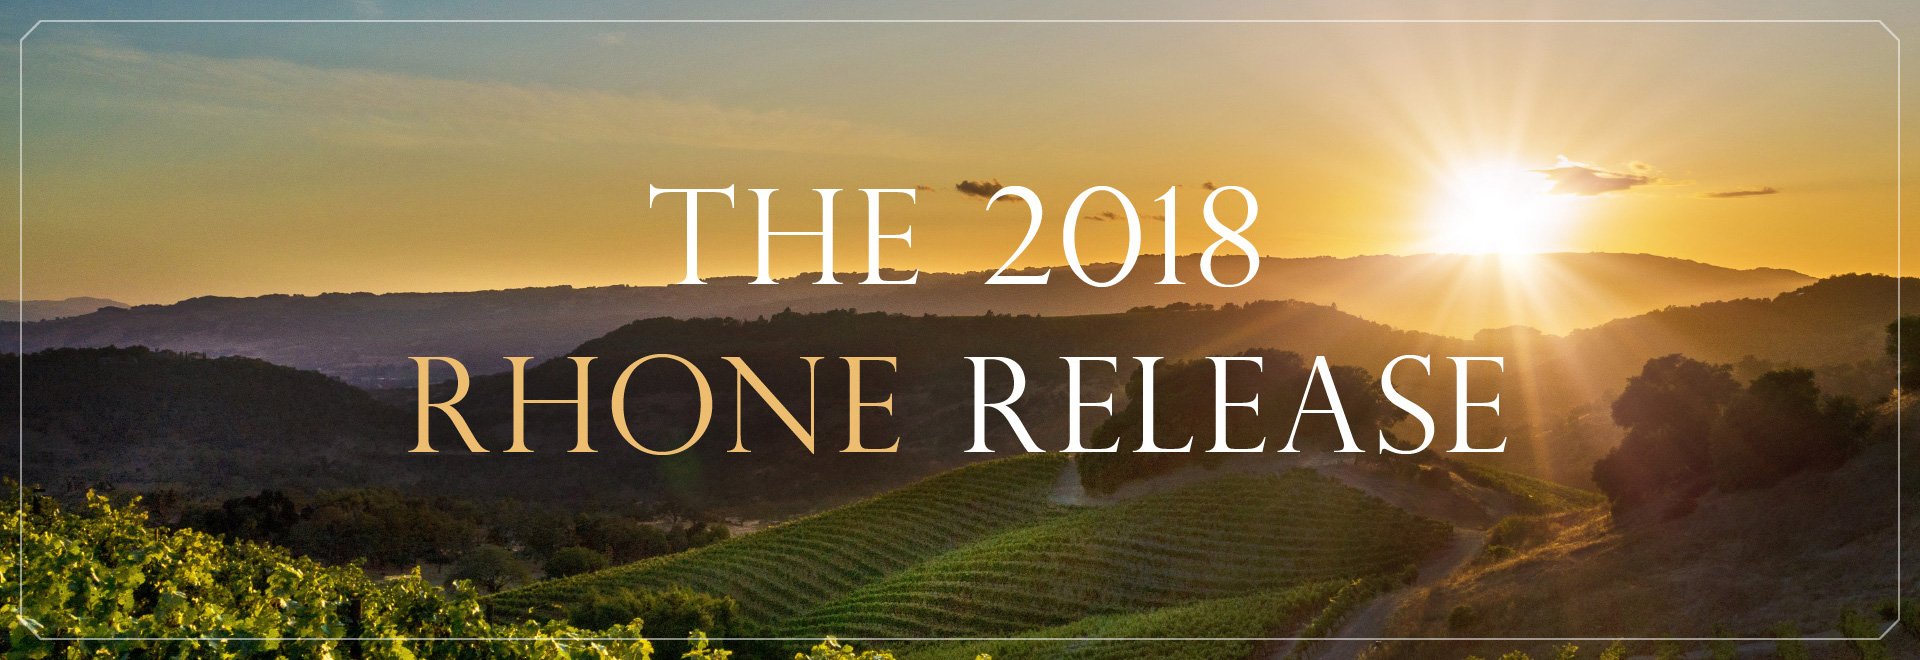 The 2018 Rhone Release